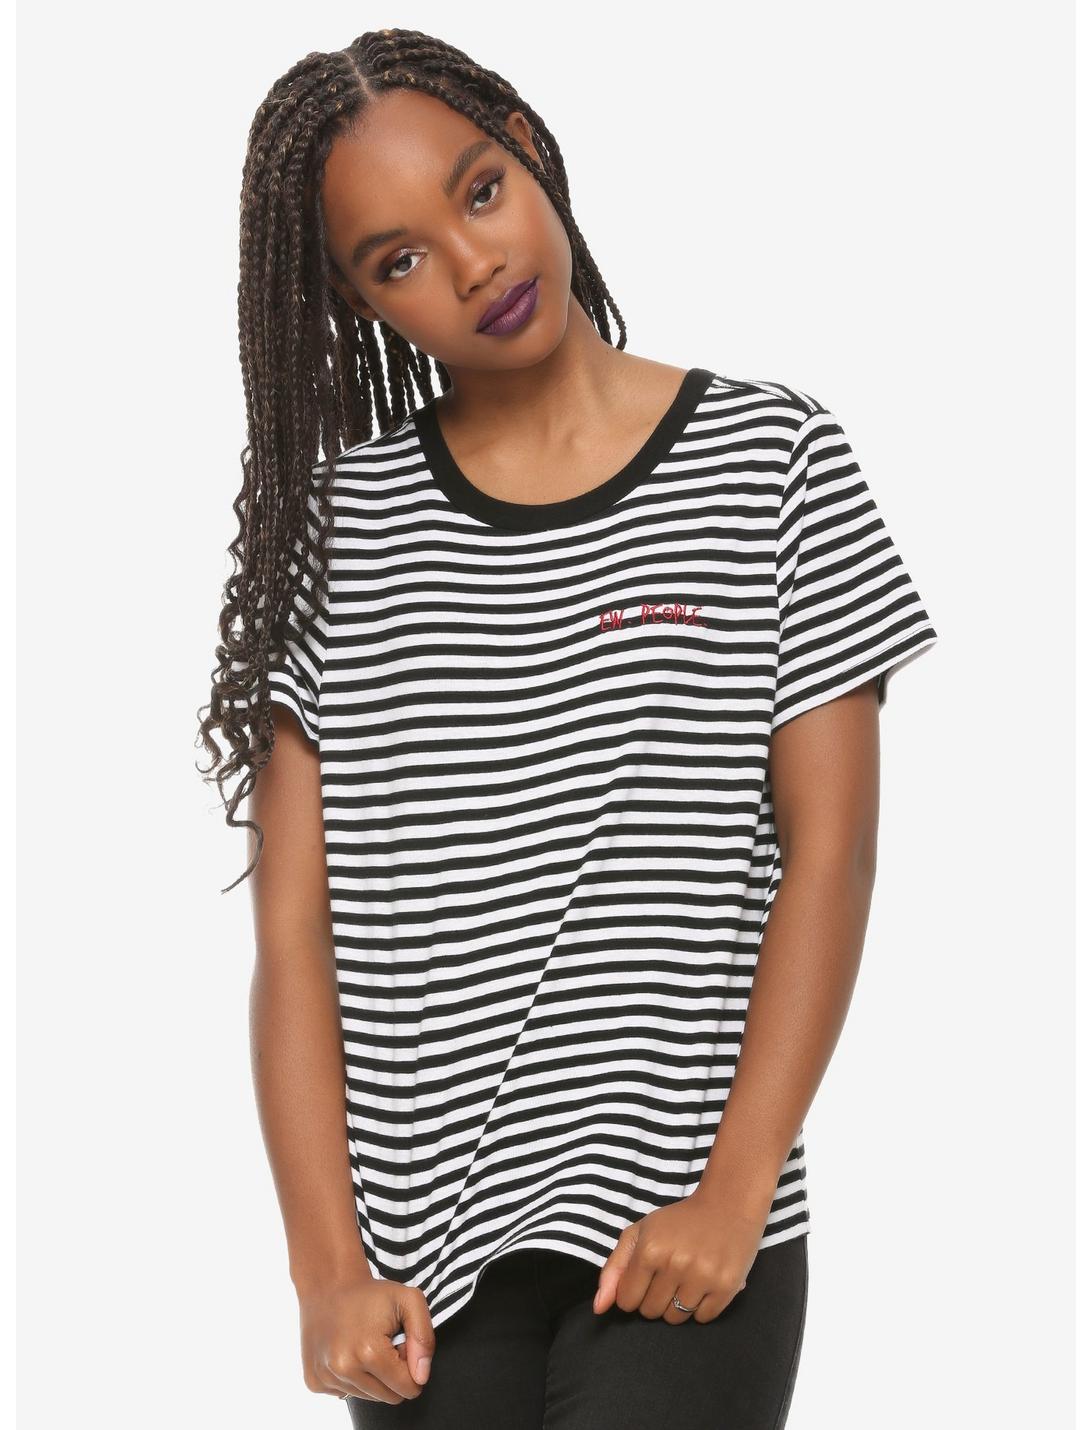 Ew People Black & White Striped Girls T-Shirt, BLACK  WHITE, hi-res